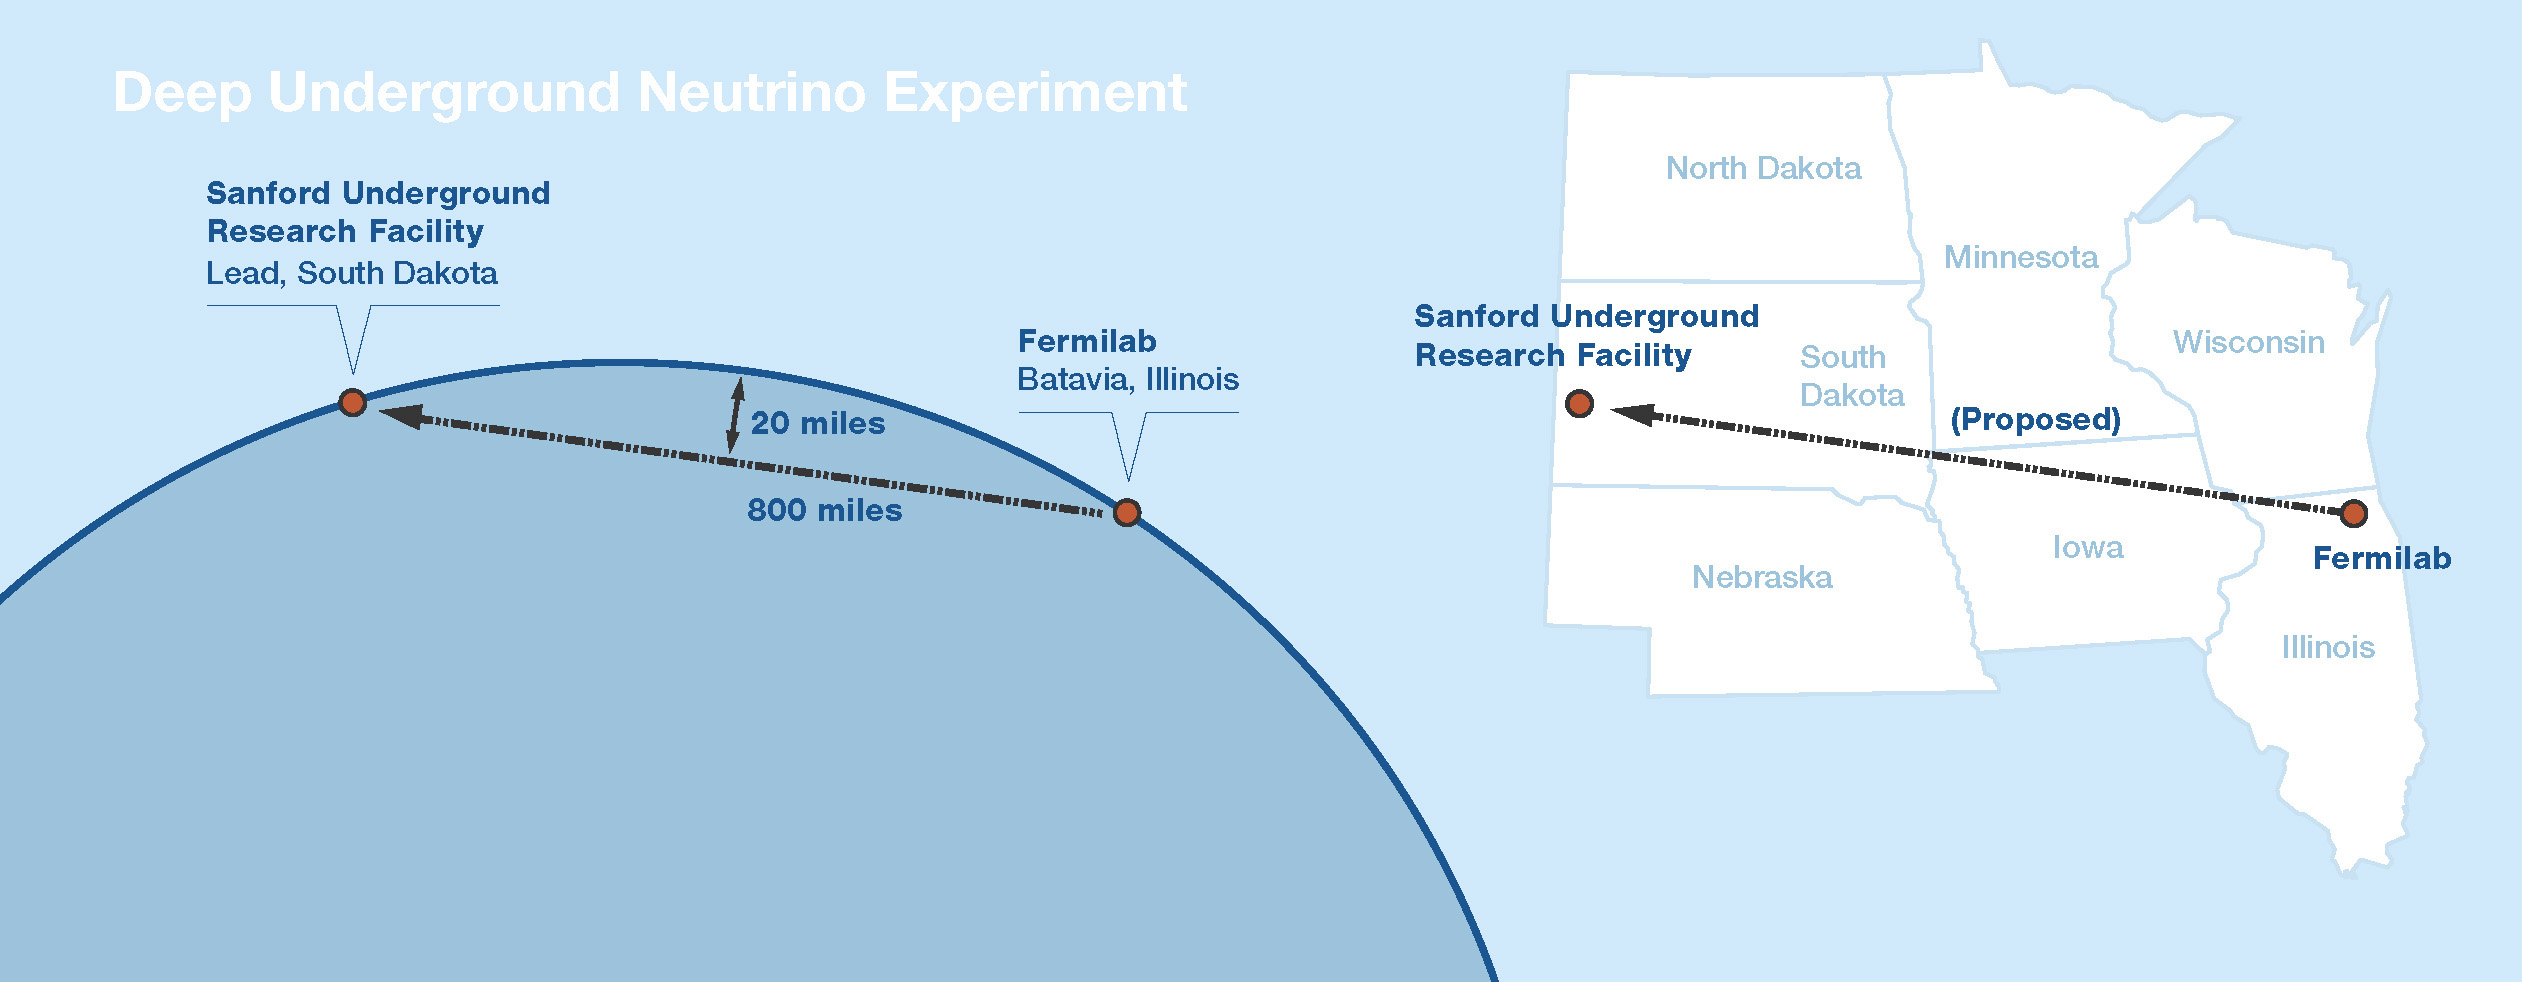 Illustration of the Deep Underground Neutrino Experiment.